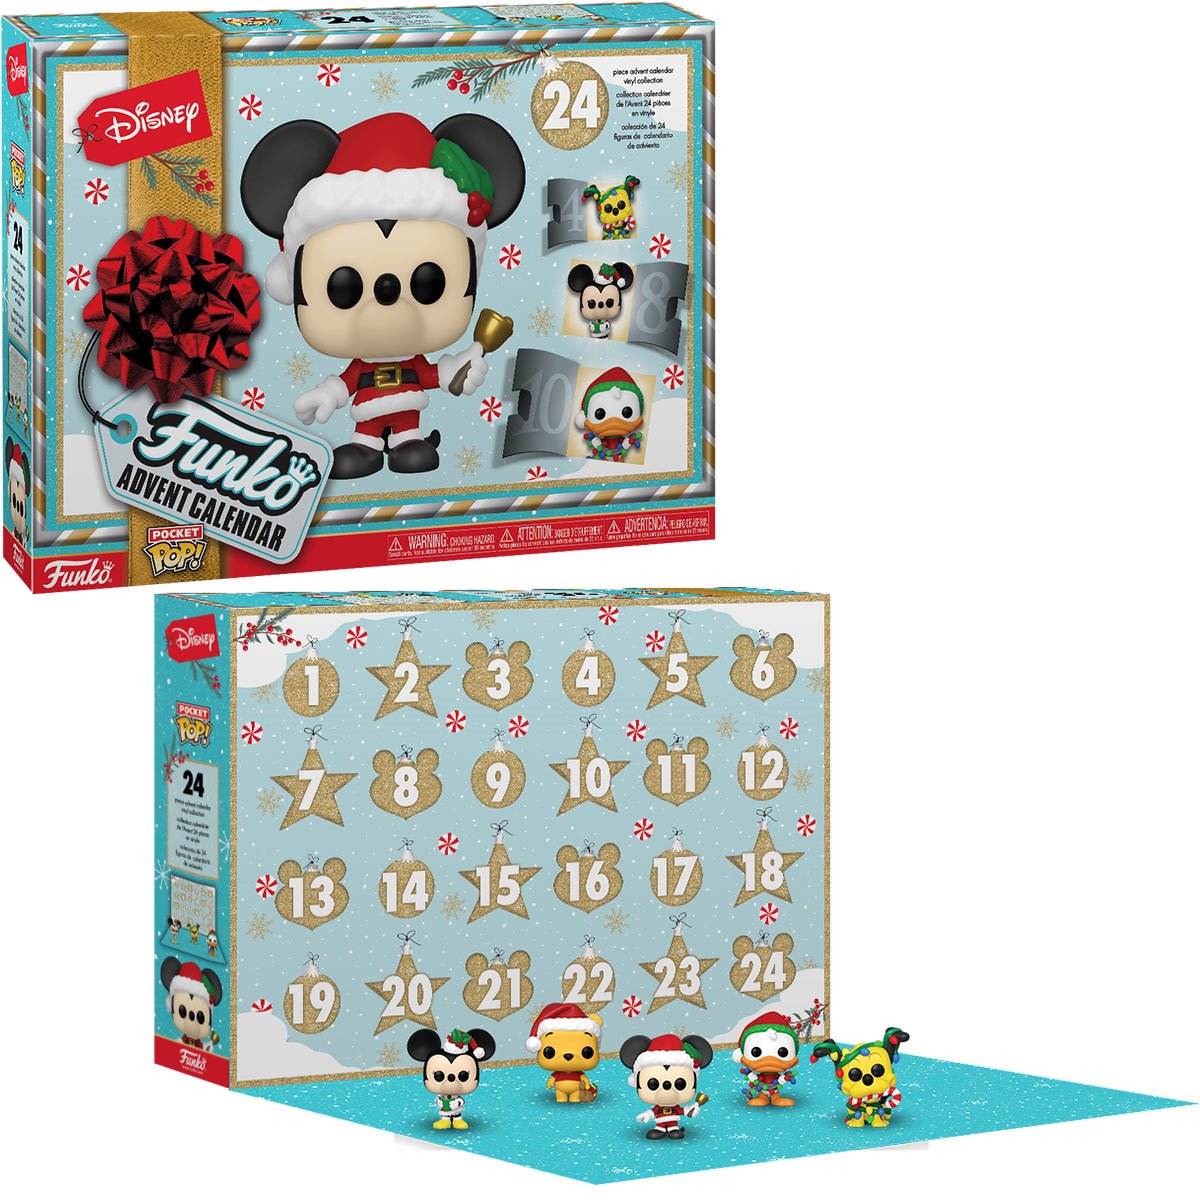 Funko Pocket POP! Star Wars Christmas Mini Advent Calendar Decorations